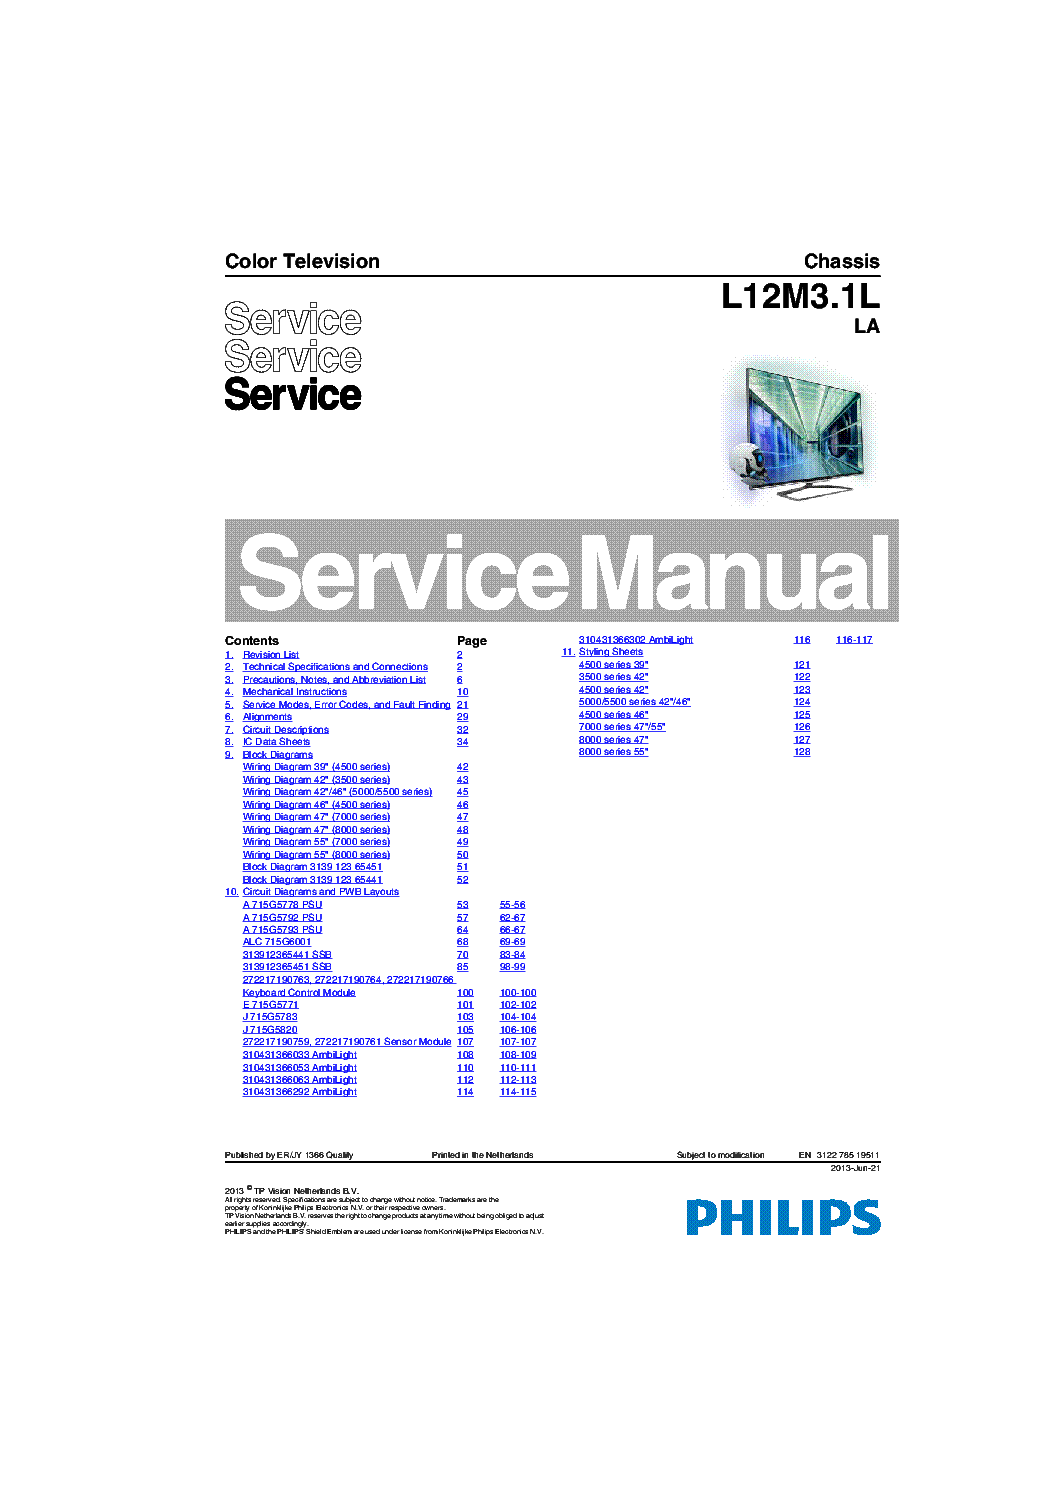 PHILIPS CHASSIS L12M3.1L LA SM service manual (1st page)